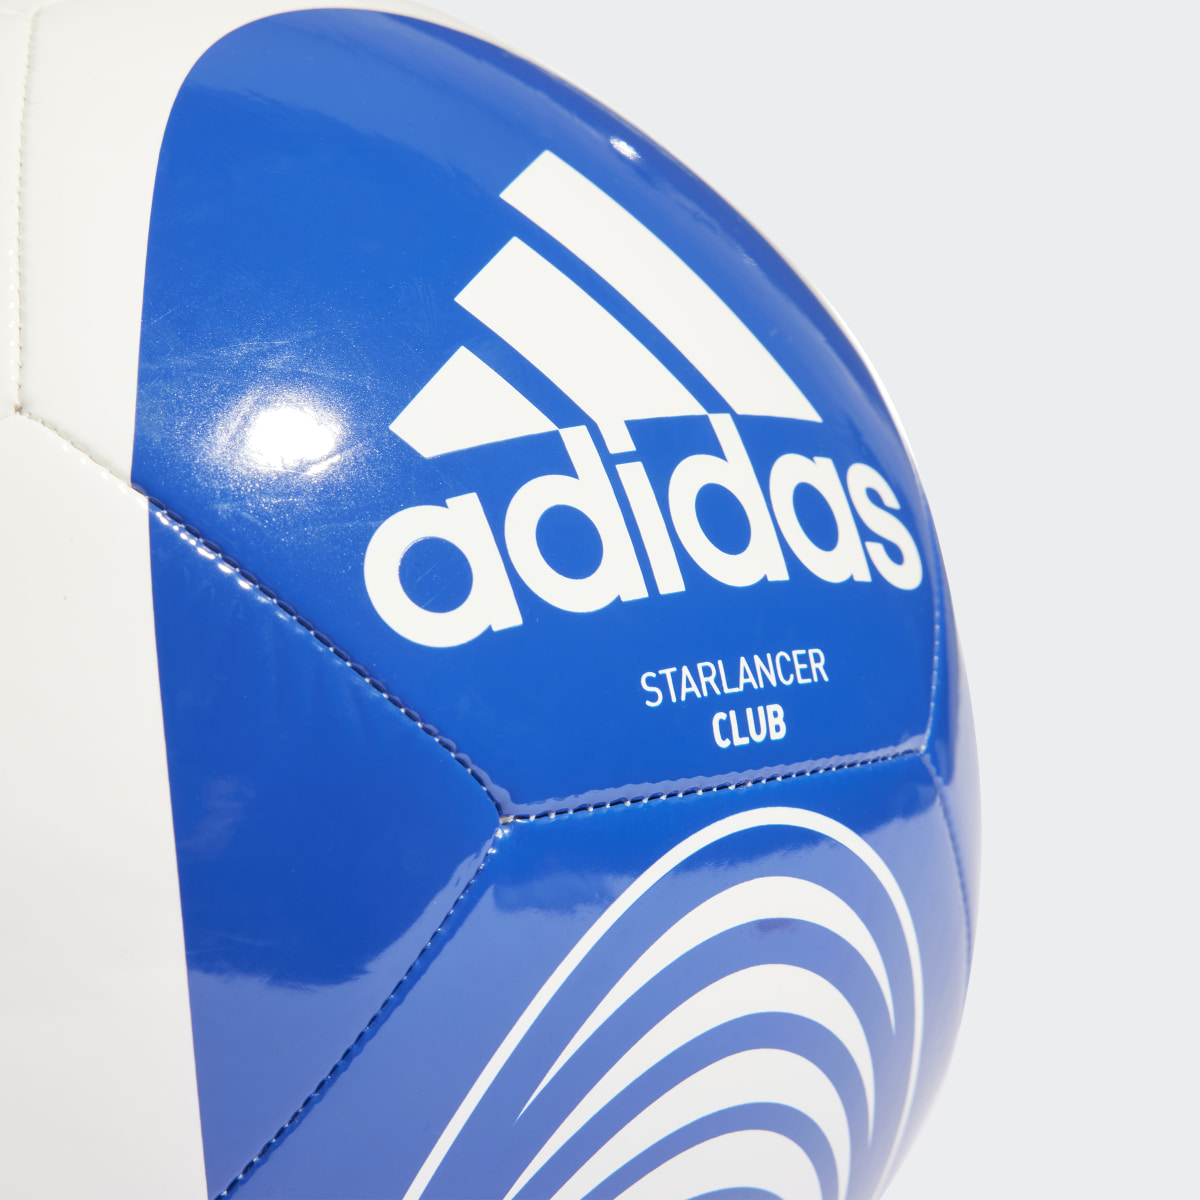 Adidas Starlancer Club Ball. 4